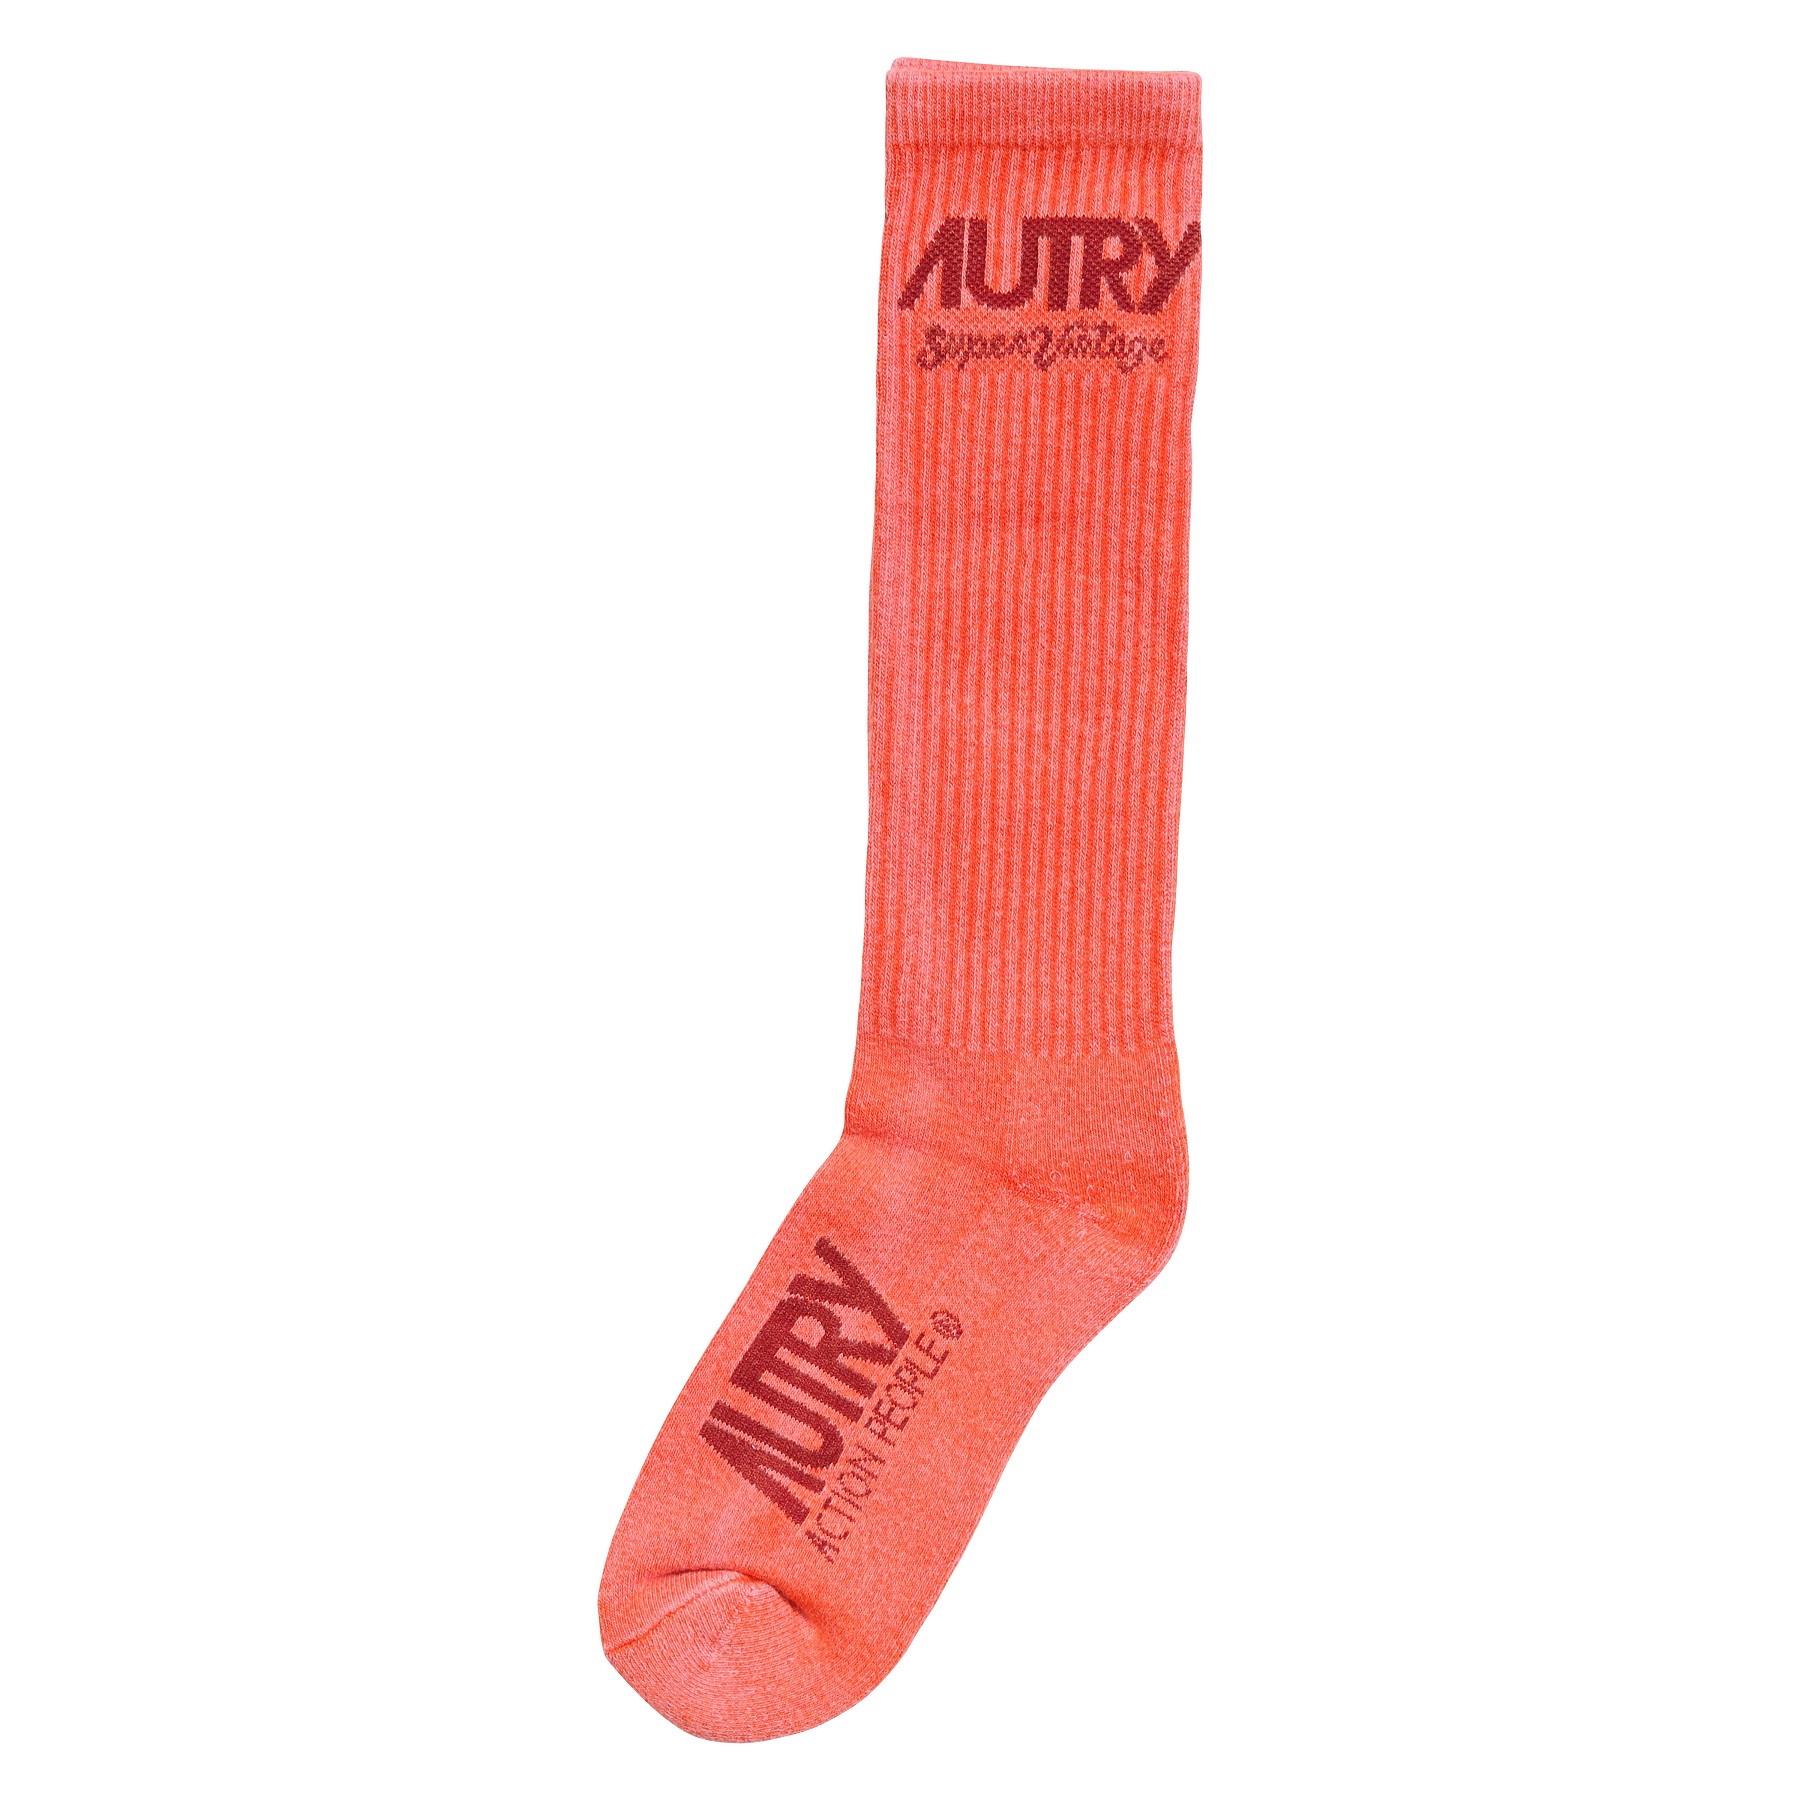 Autry Action Shoes Socks Supervintage Tinto Orange